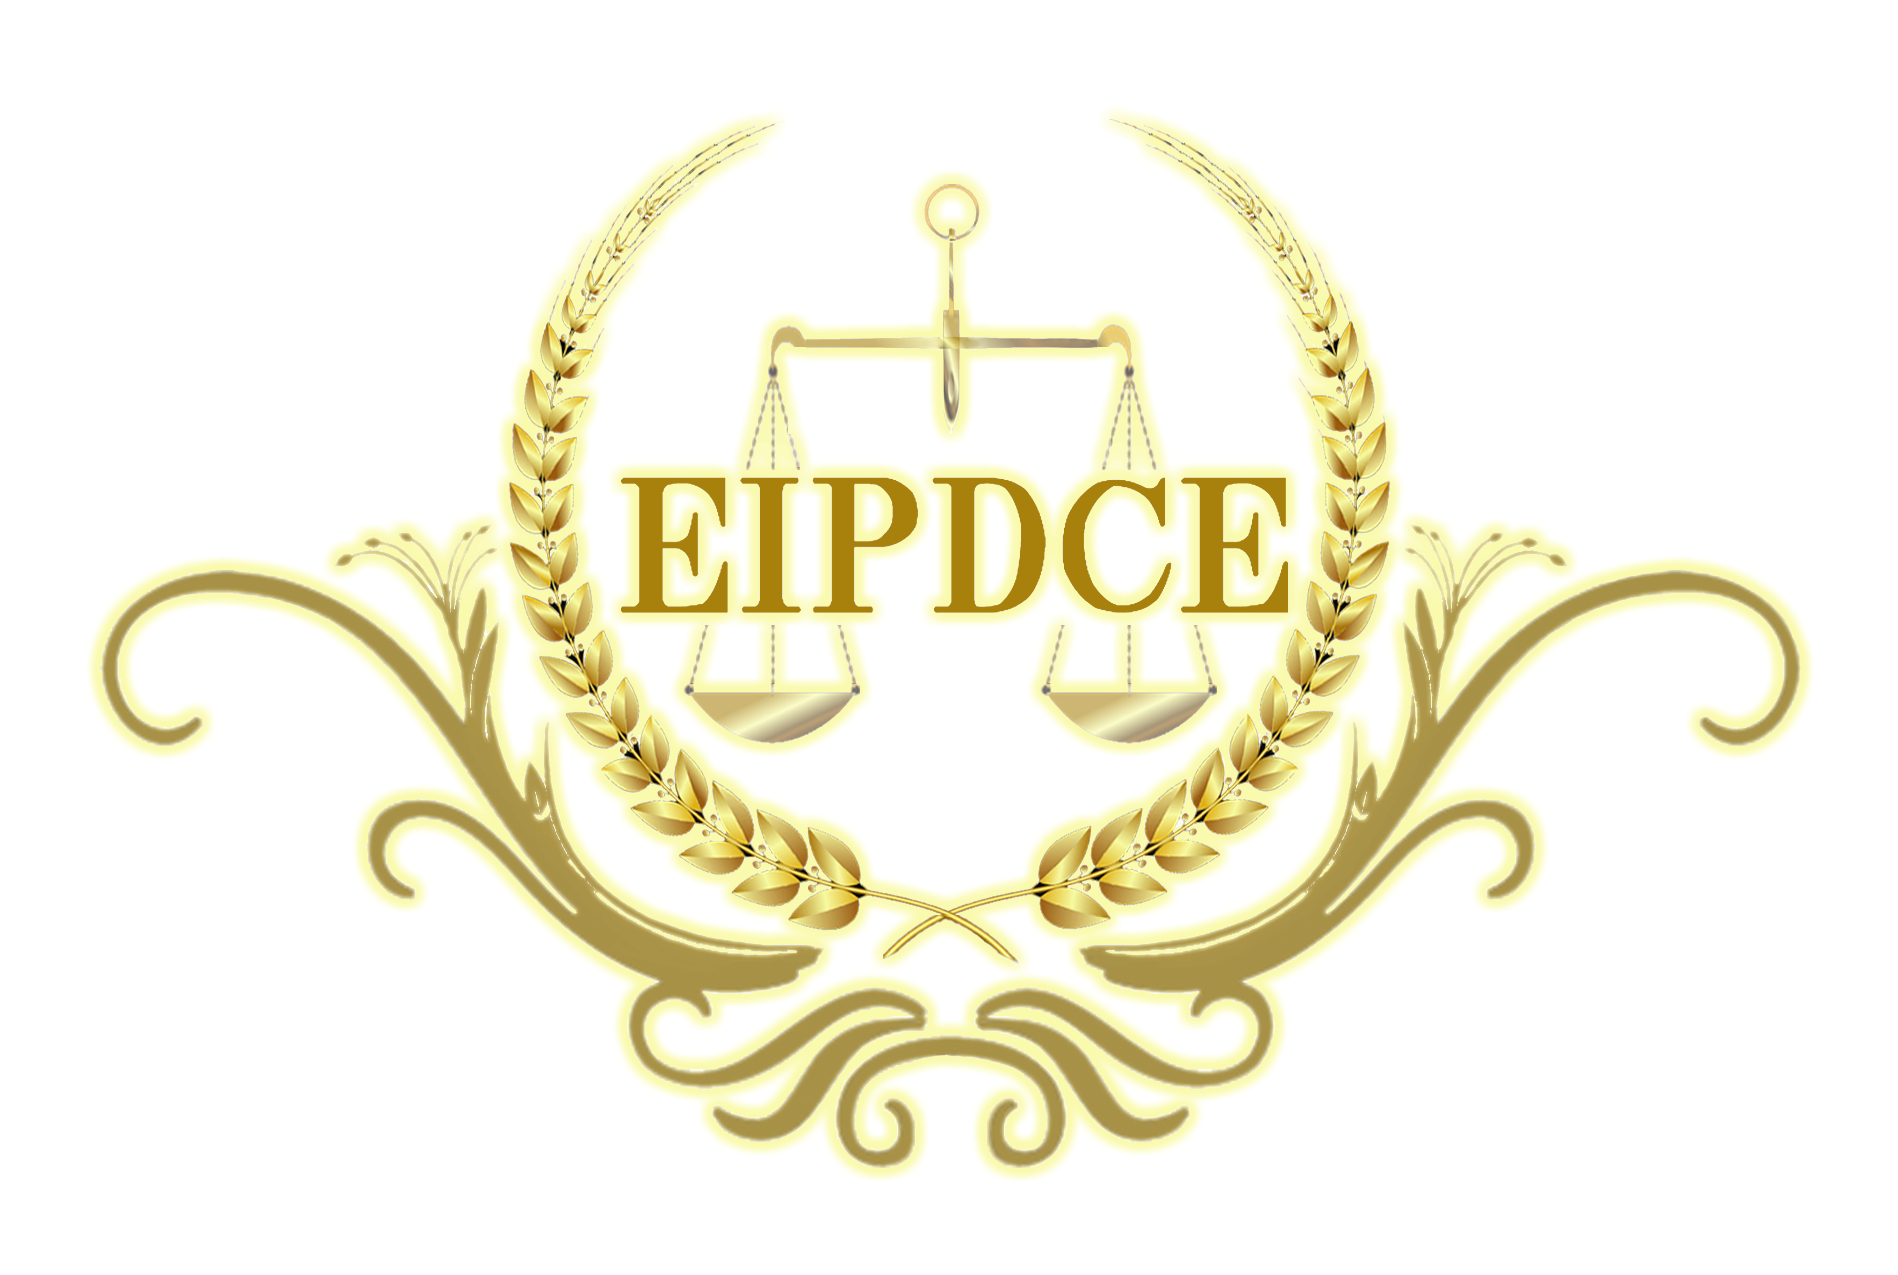 Logo de EIPDCE